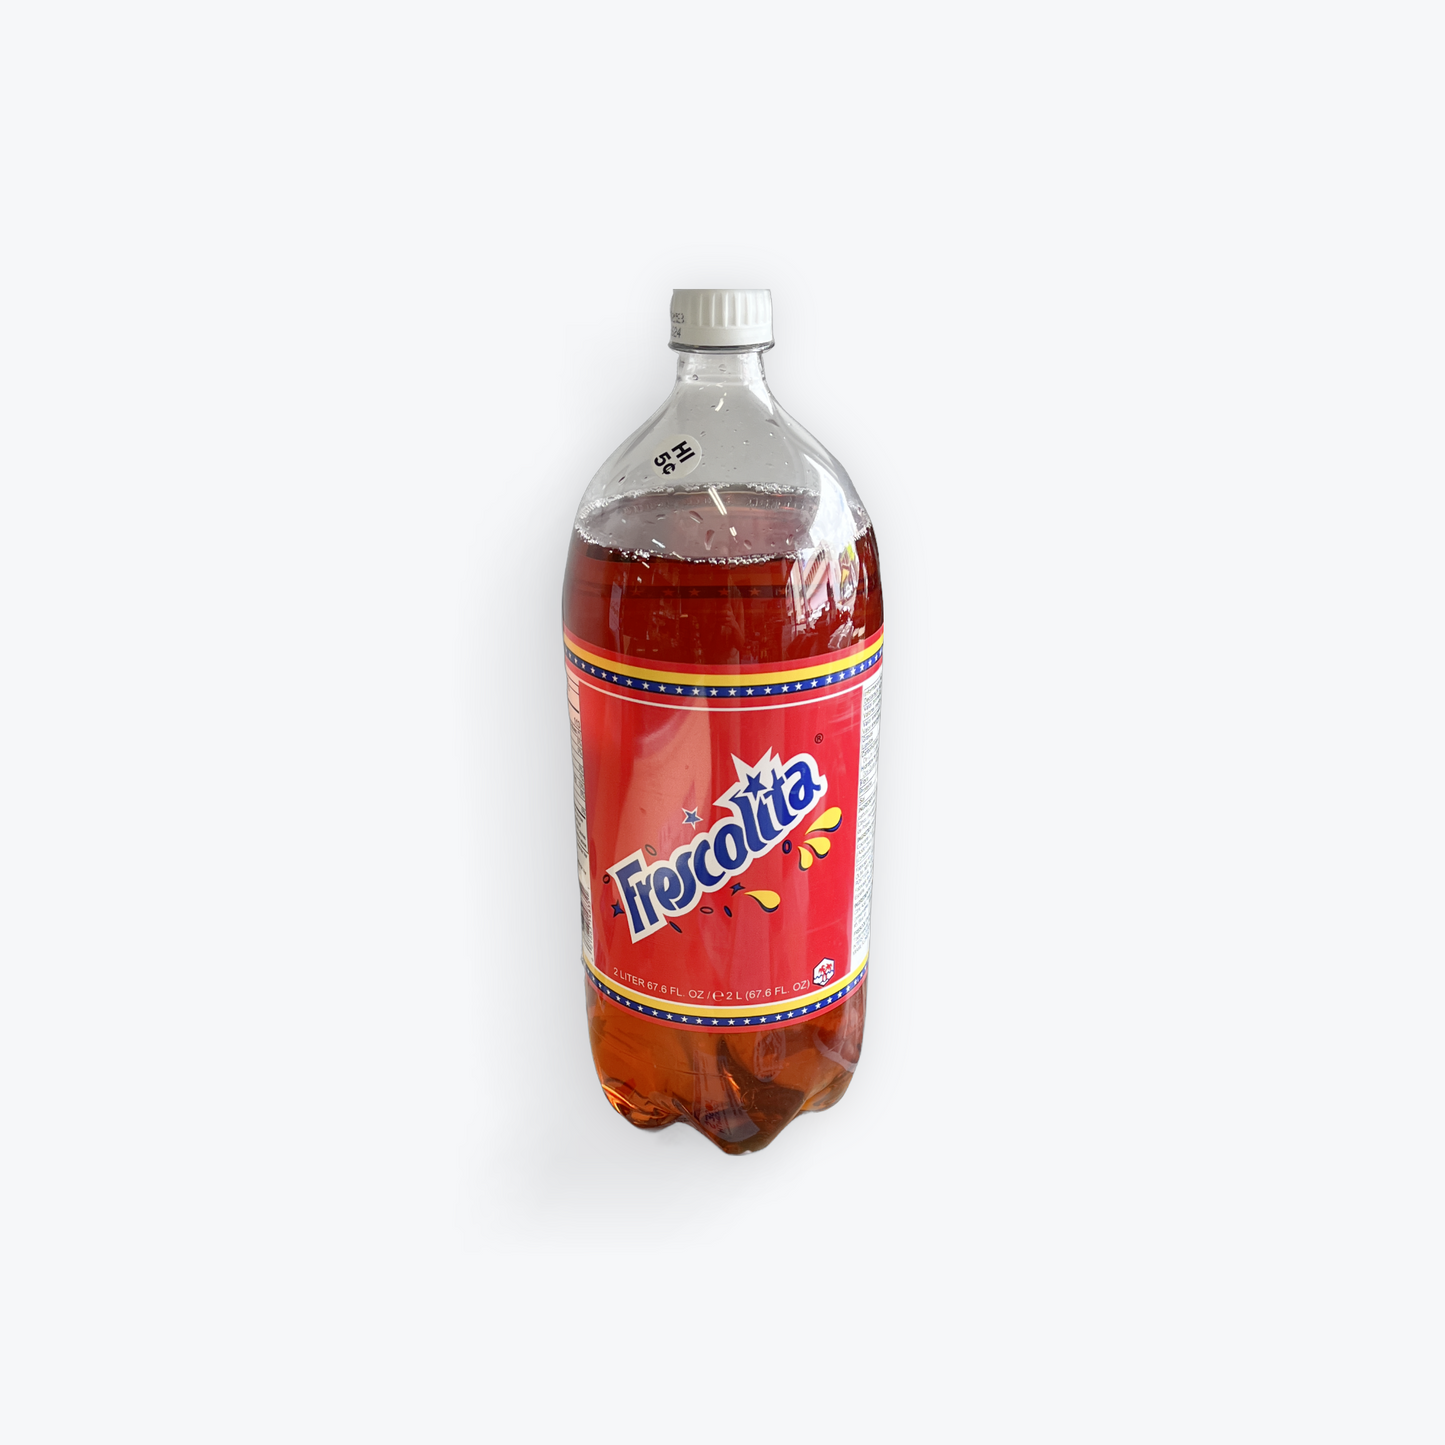 Frescolita - Soda, 2 Lt, Single bottle